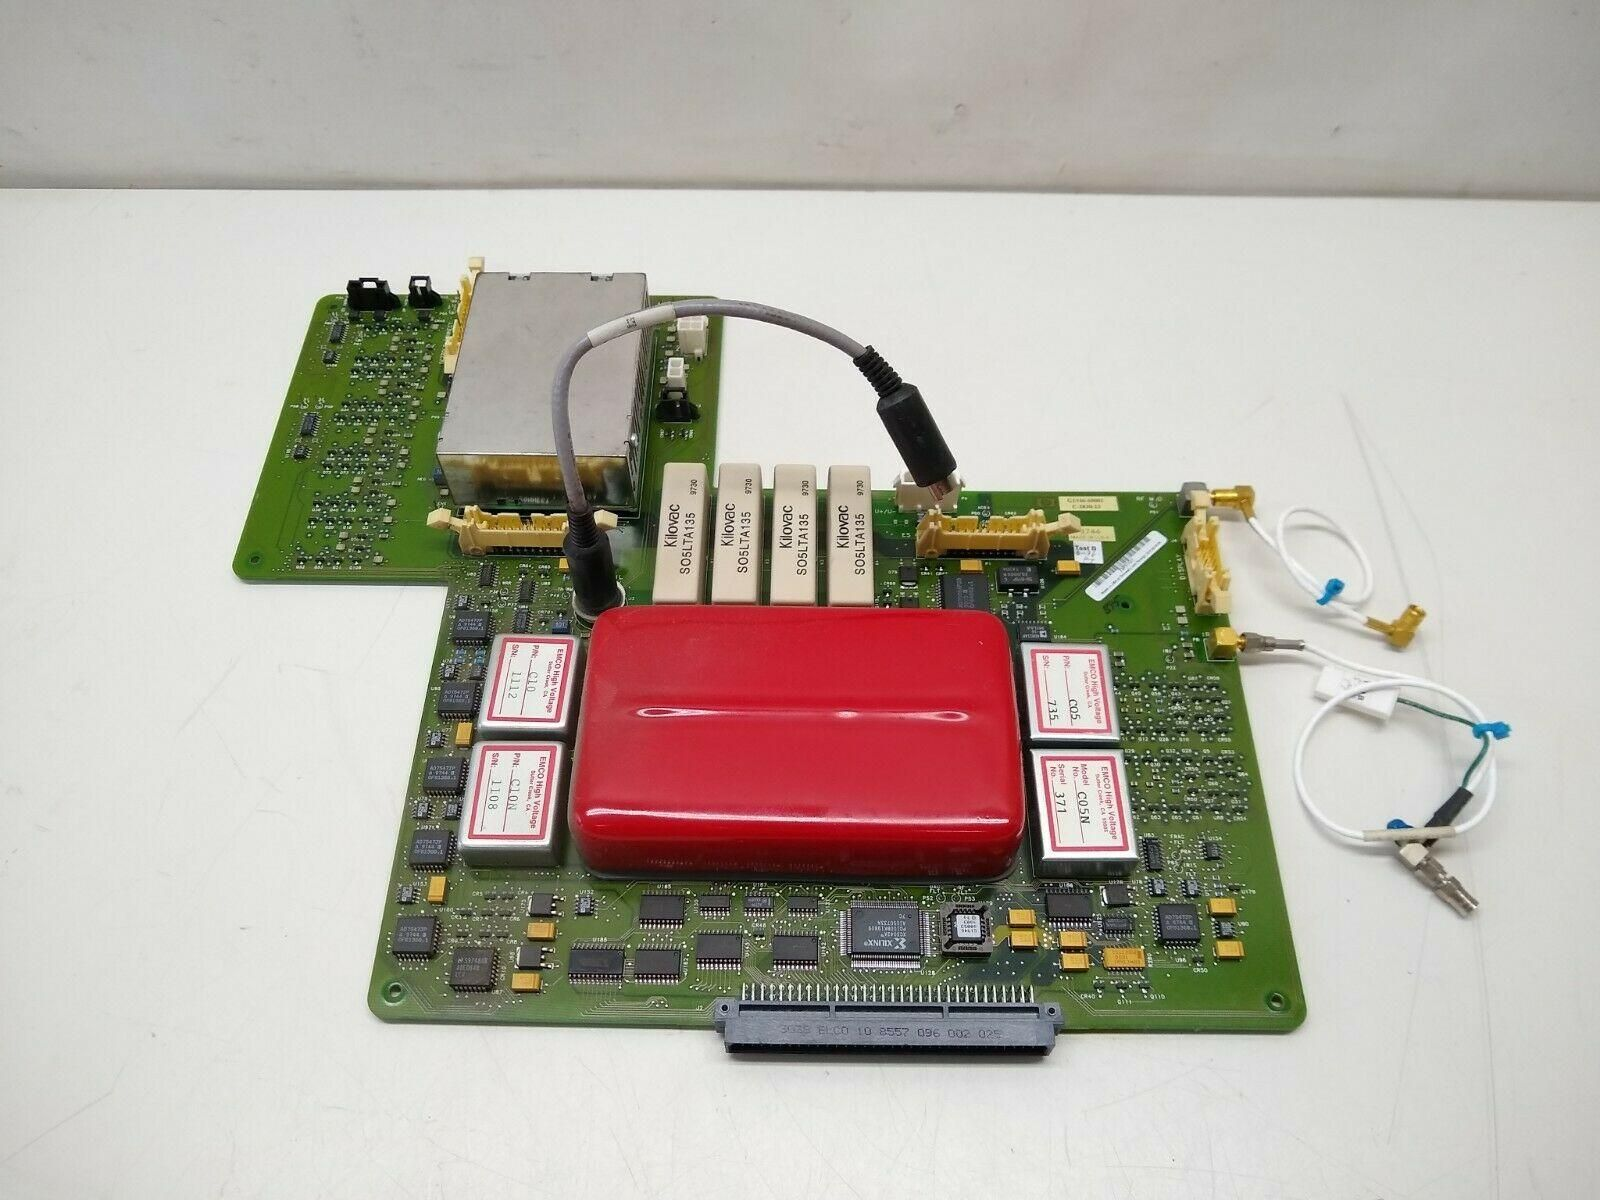 Agilent 1100 Series G1946-60001 Analyzer Power Board, HPLC, MS